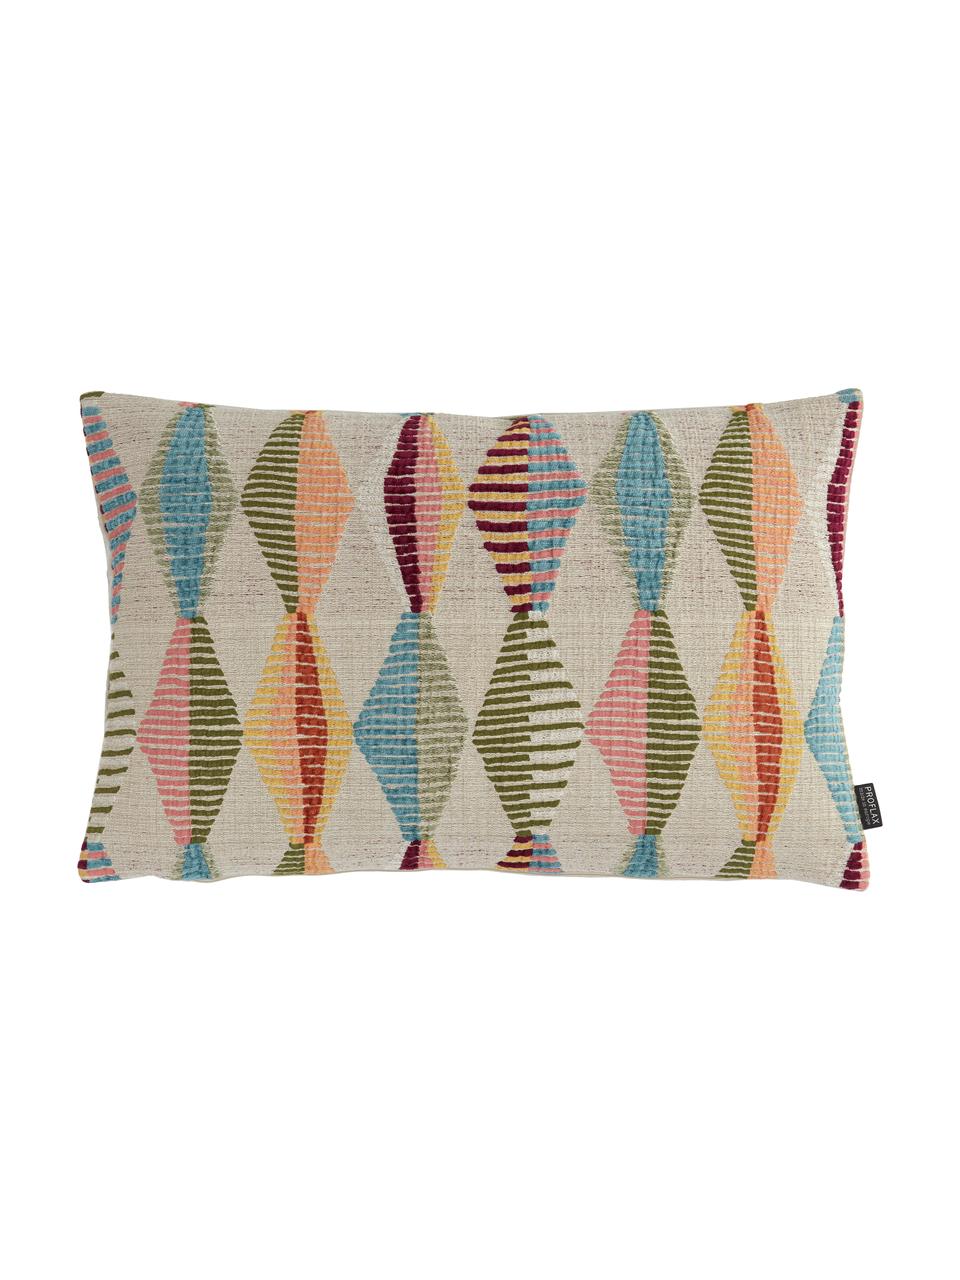 Kussenhoes Ipanema met gekleurd patroon, Beige, multicolour, 40 x 60 cm